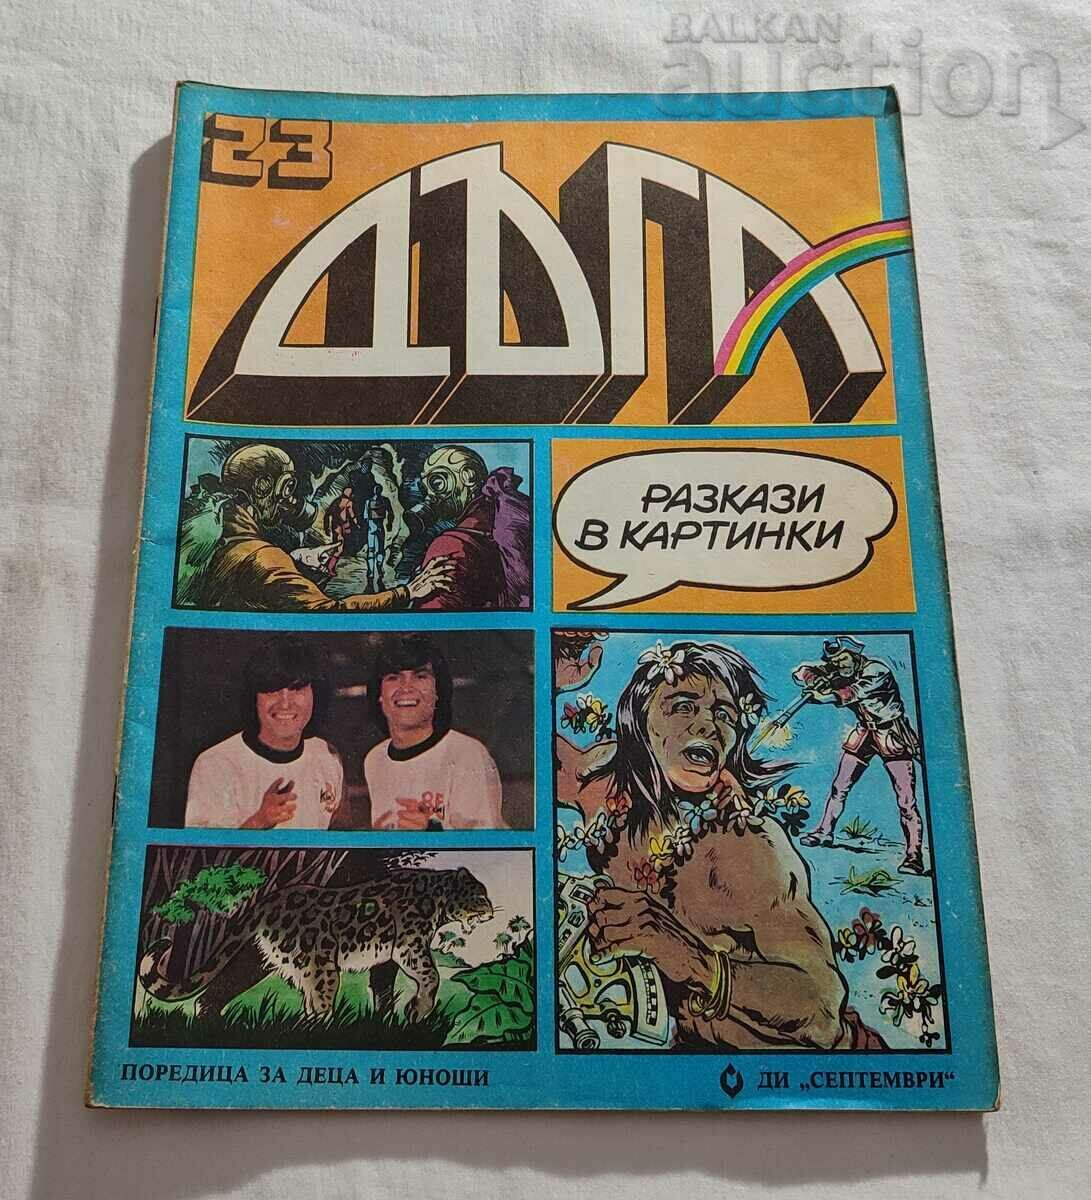 "RAINBOW" MAGAZINE ISSUE 23 ARGYROVI BROTHERS 1986